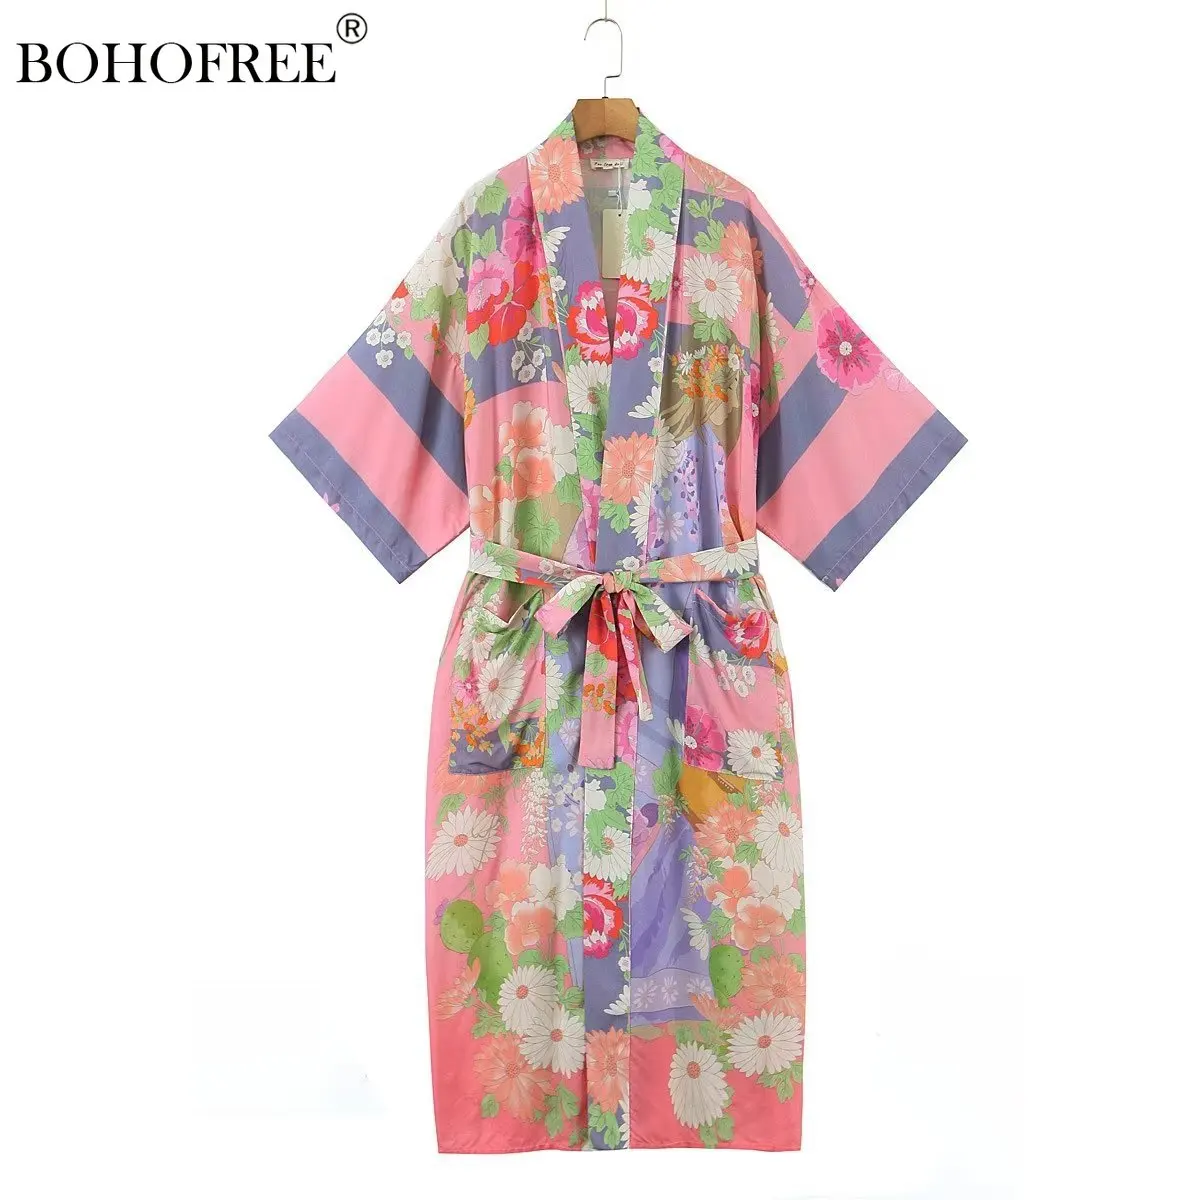 

Vintage Chic Boho Robes Rayon Cotton Floral Print Bikini Cover Ups Kimono Pockets Sashes Bohemian Kaftan Beachwear Swimsuit Robe